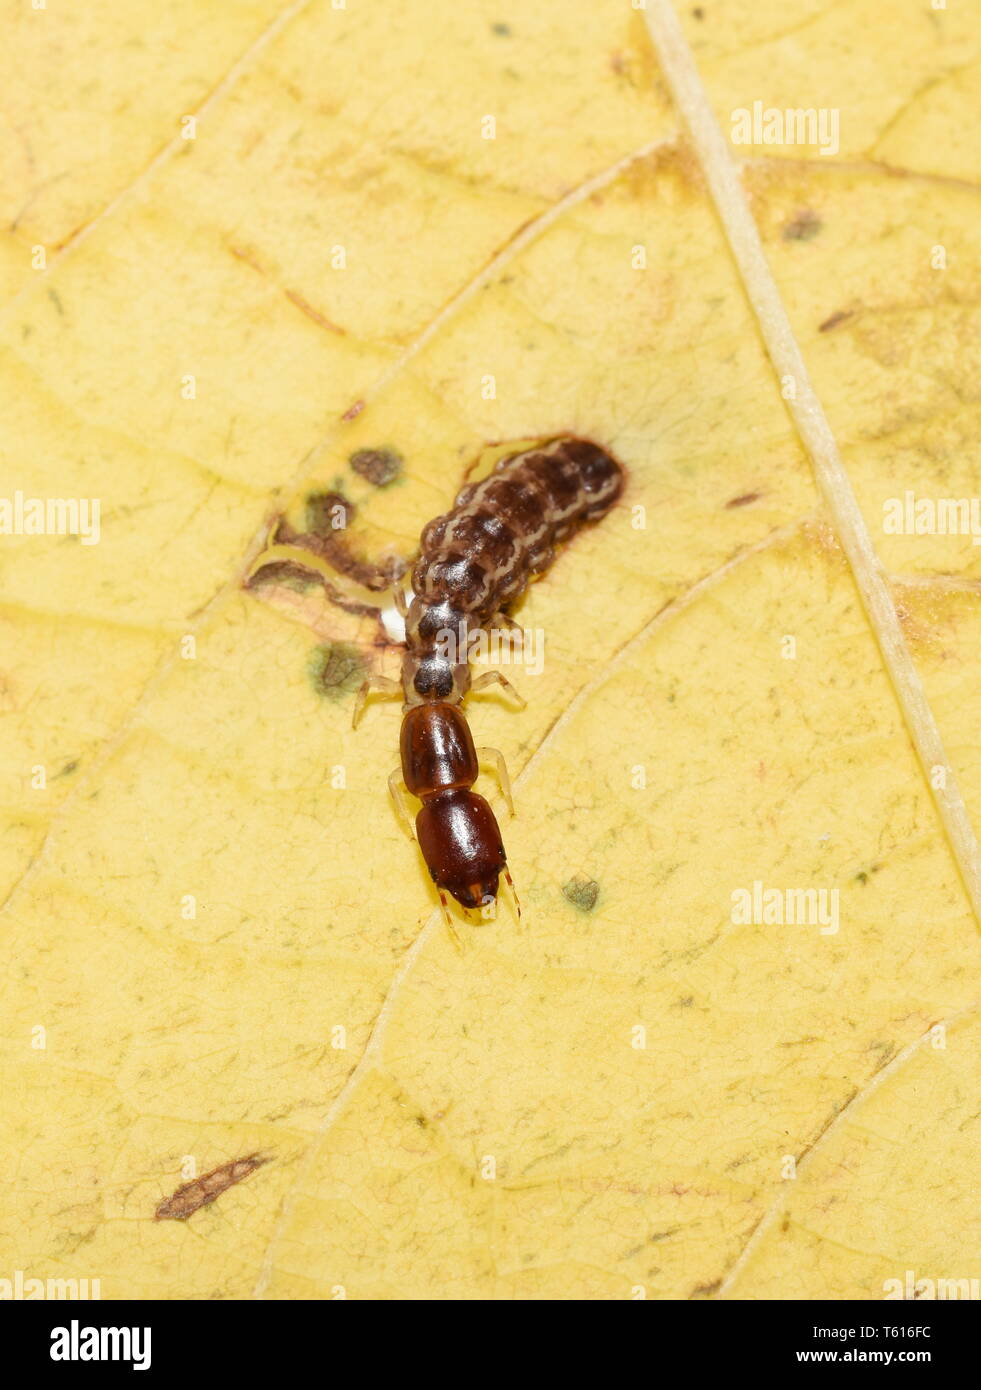 Snakefly larvae crawling on a yellow leaf Stock Photo